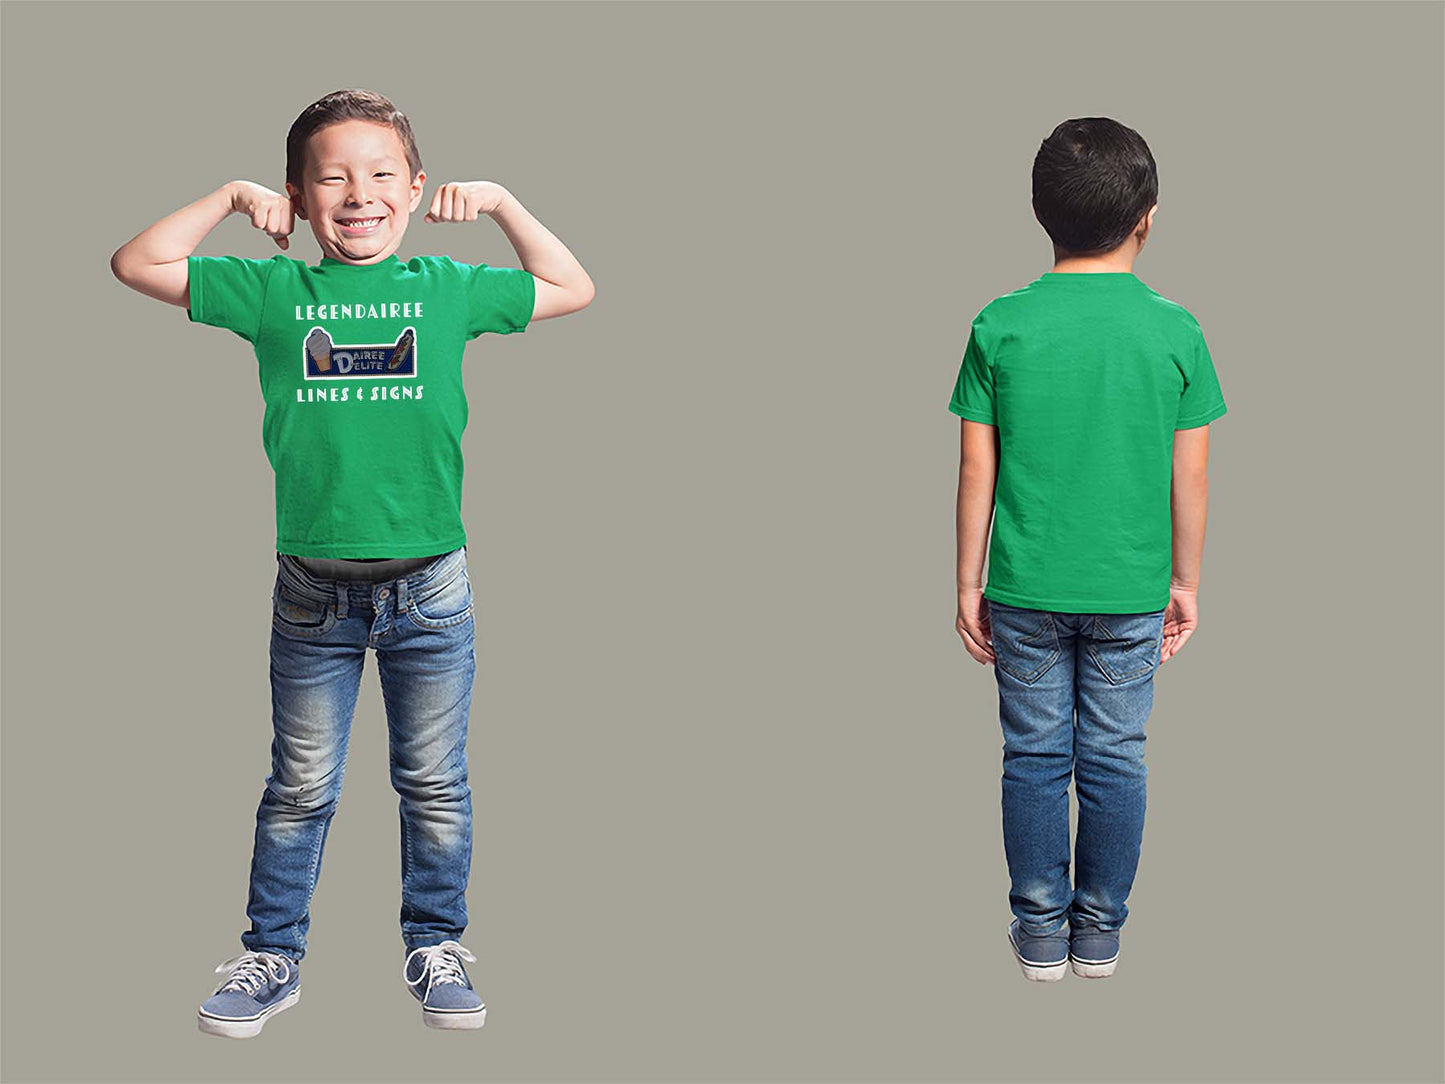 Legendairee Youth T-Shirt Youth Small Irish Green